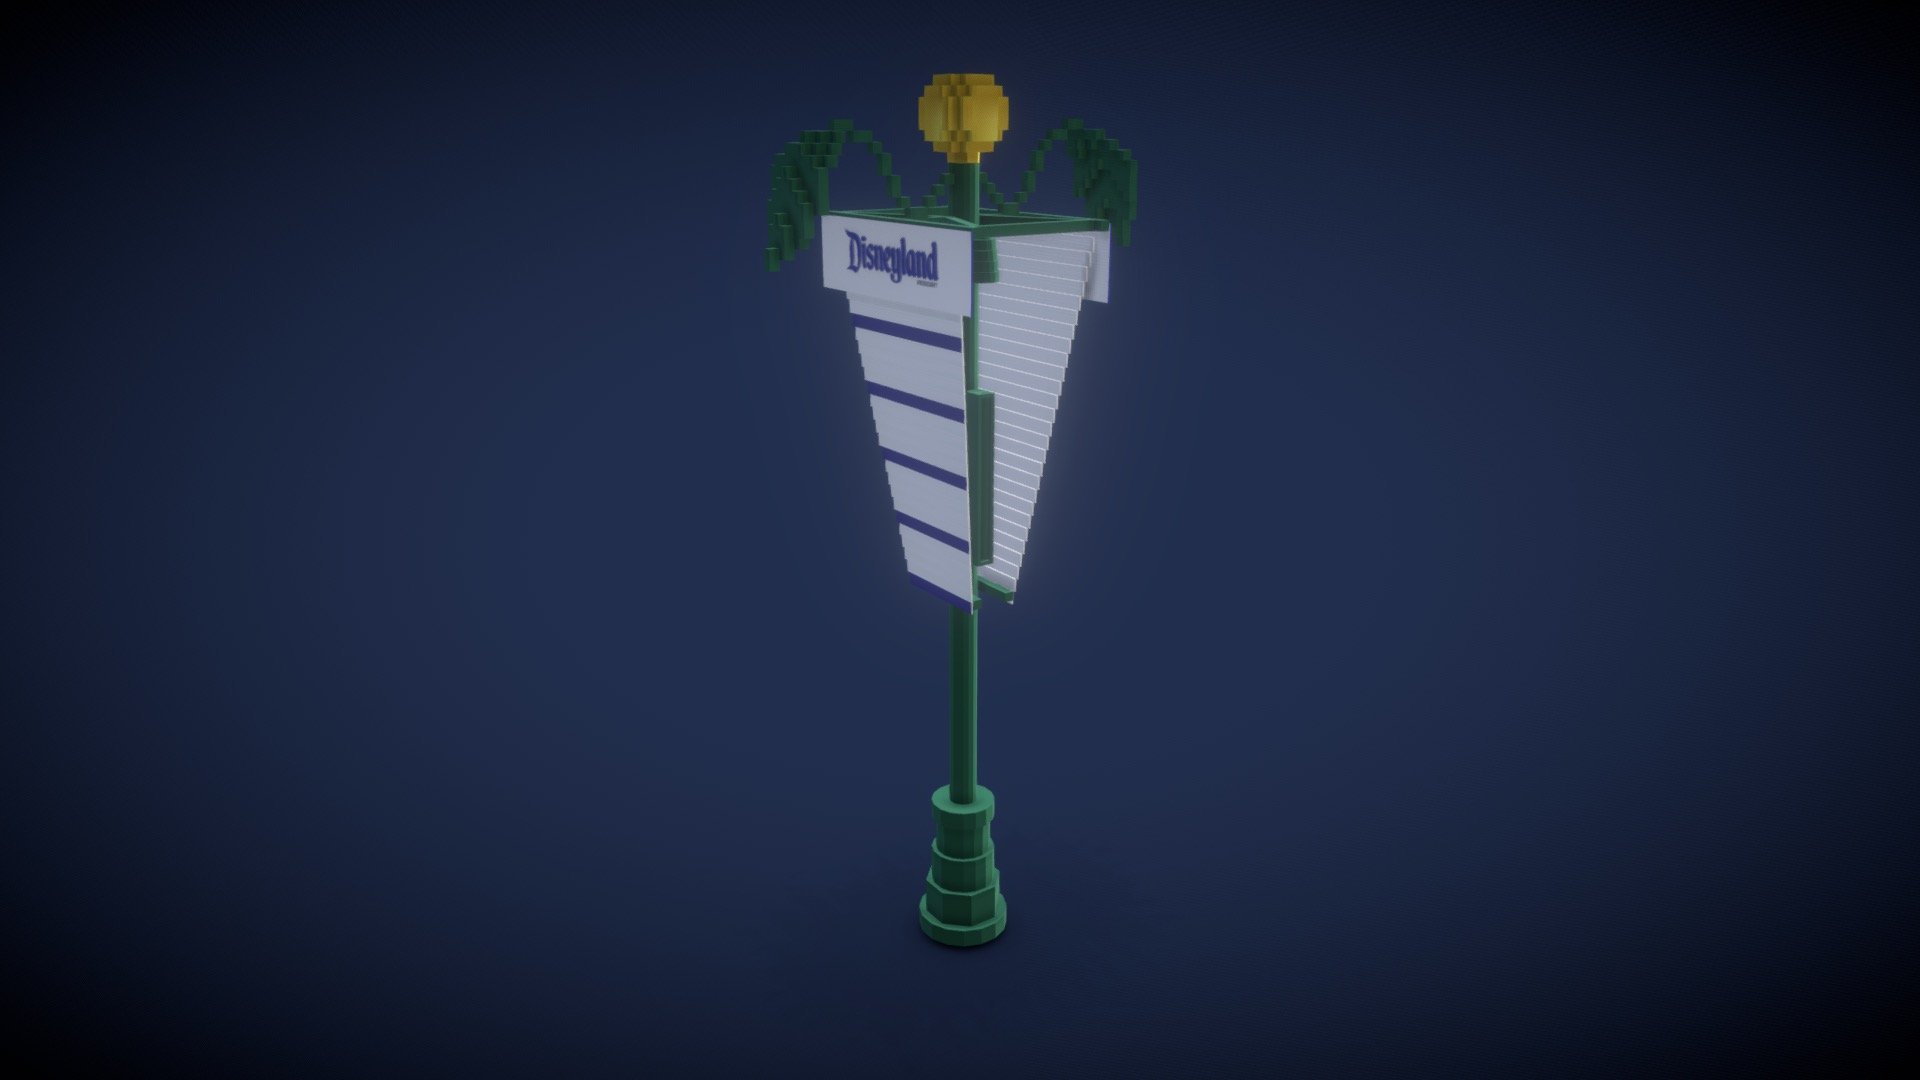 Lamp from the Disneyland Resort Entrance Plaza